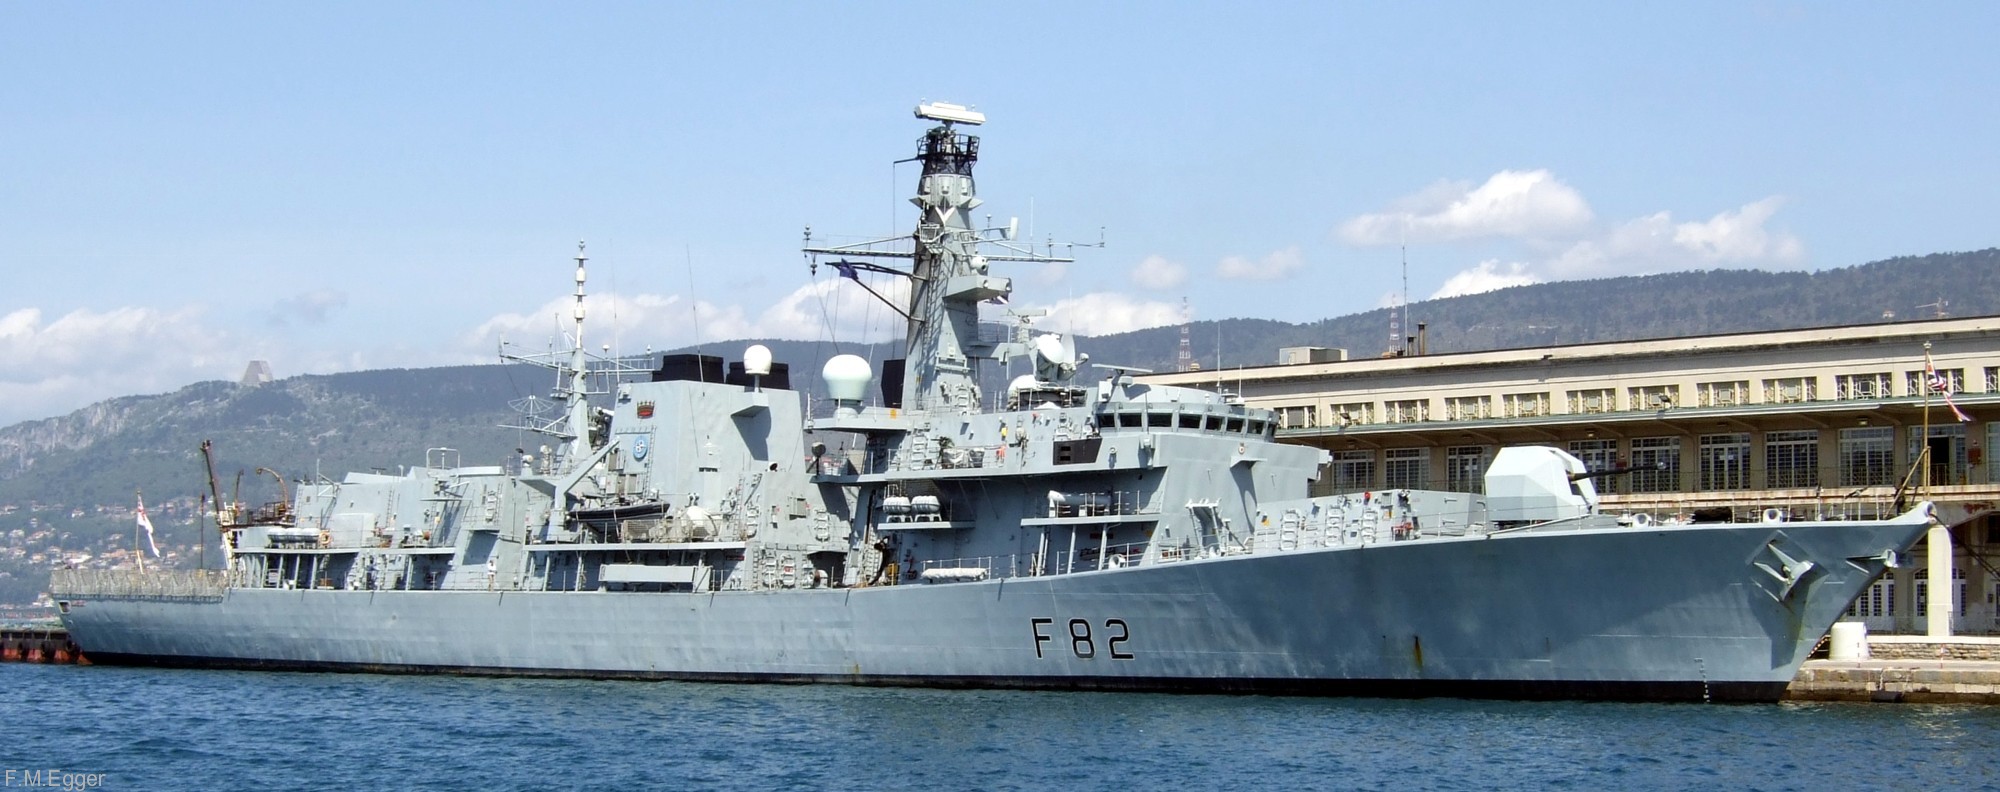 f82 hms somerset type 23 frigate royal navy nato snmg-2 trieste italy 14